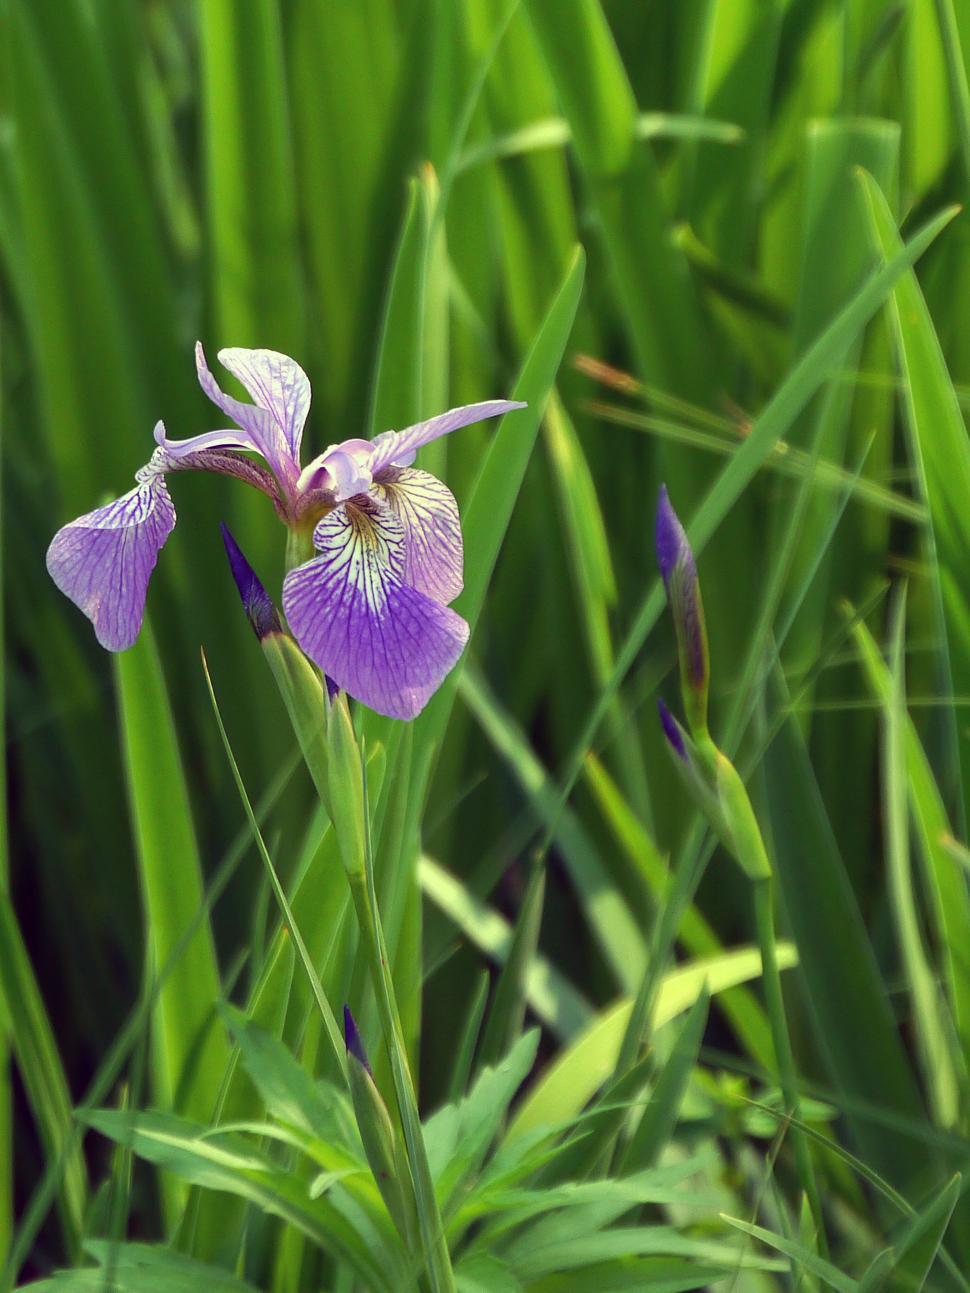 Free Image of Purple Iris Flower in Green 